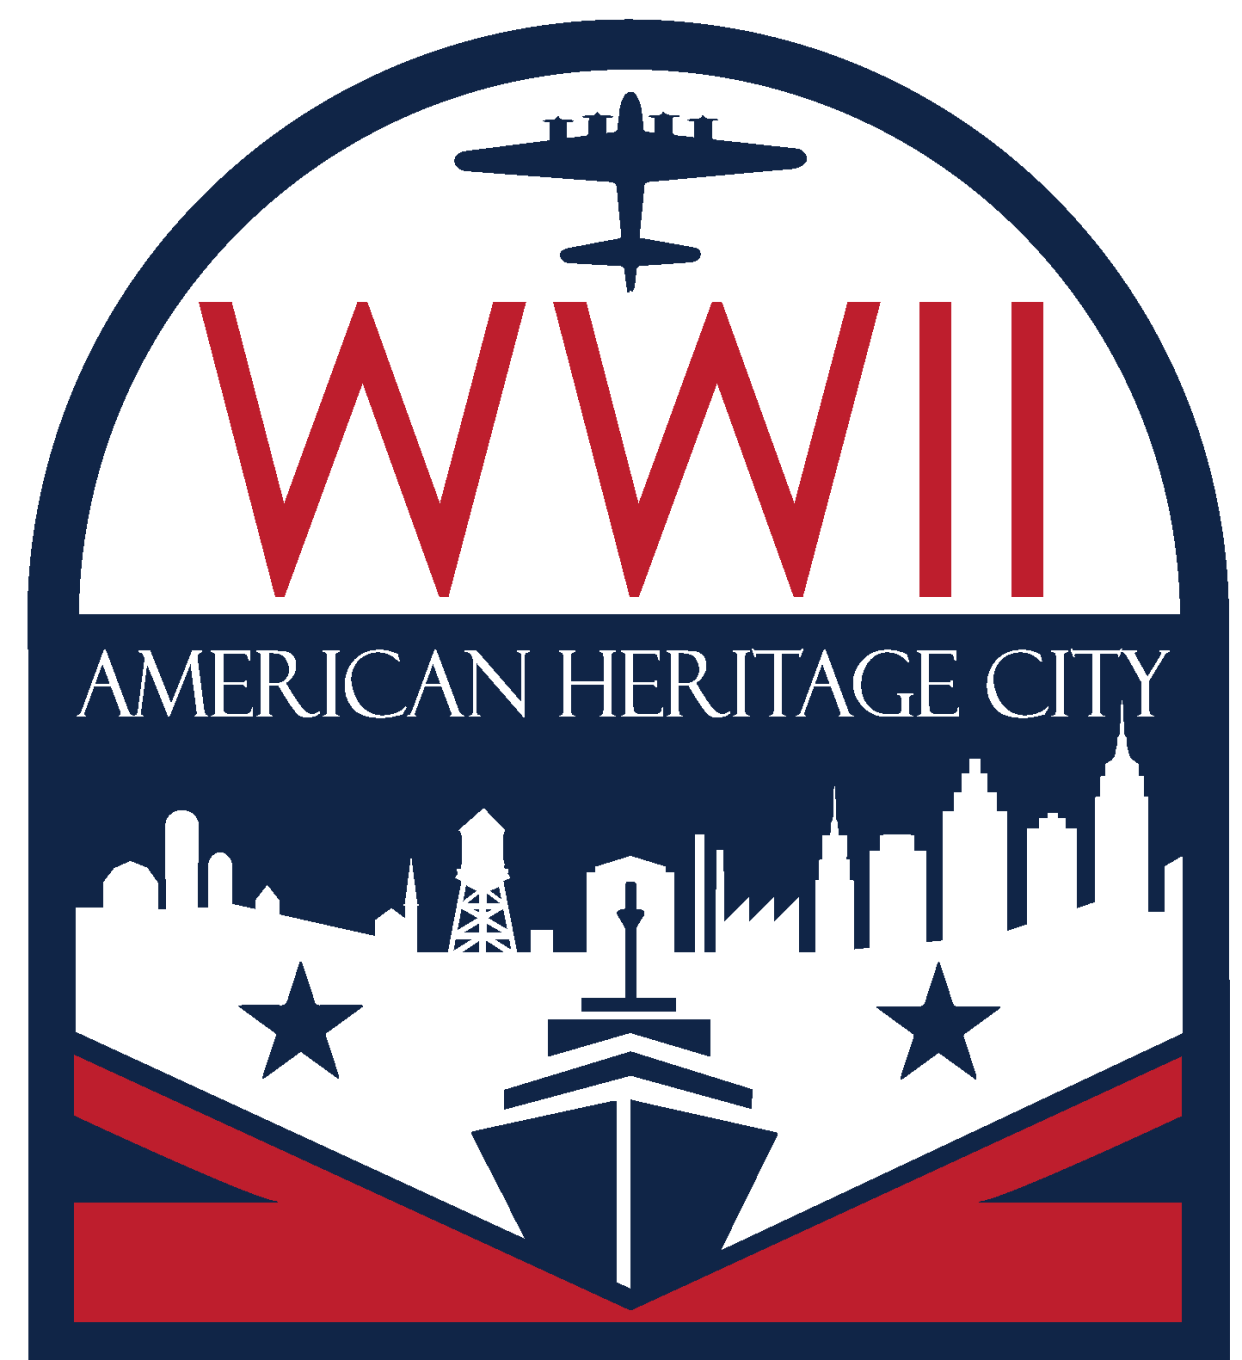 World War II American Heritage City logo